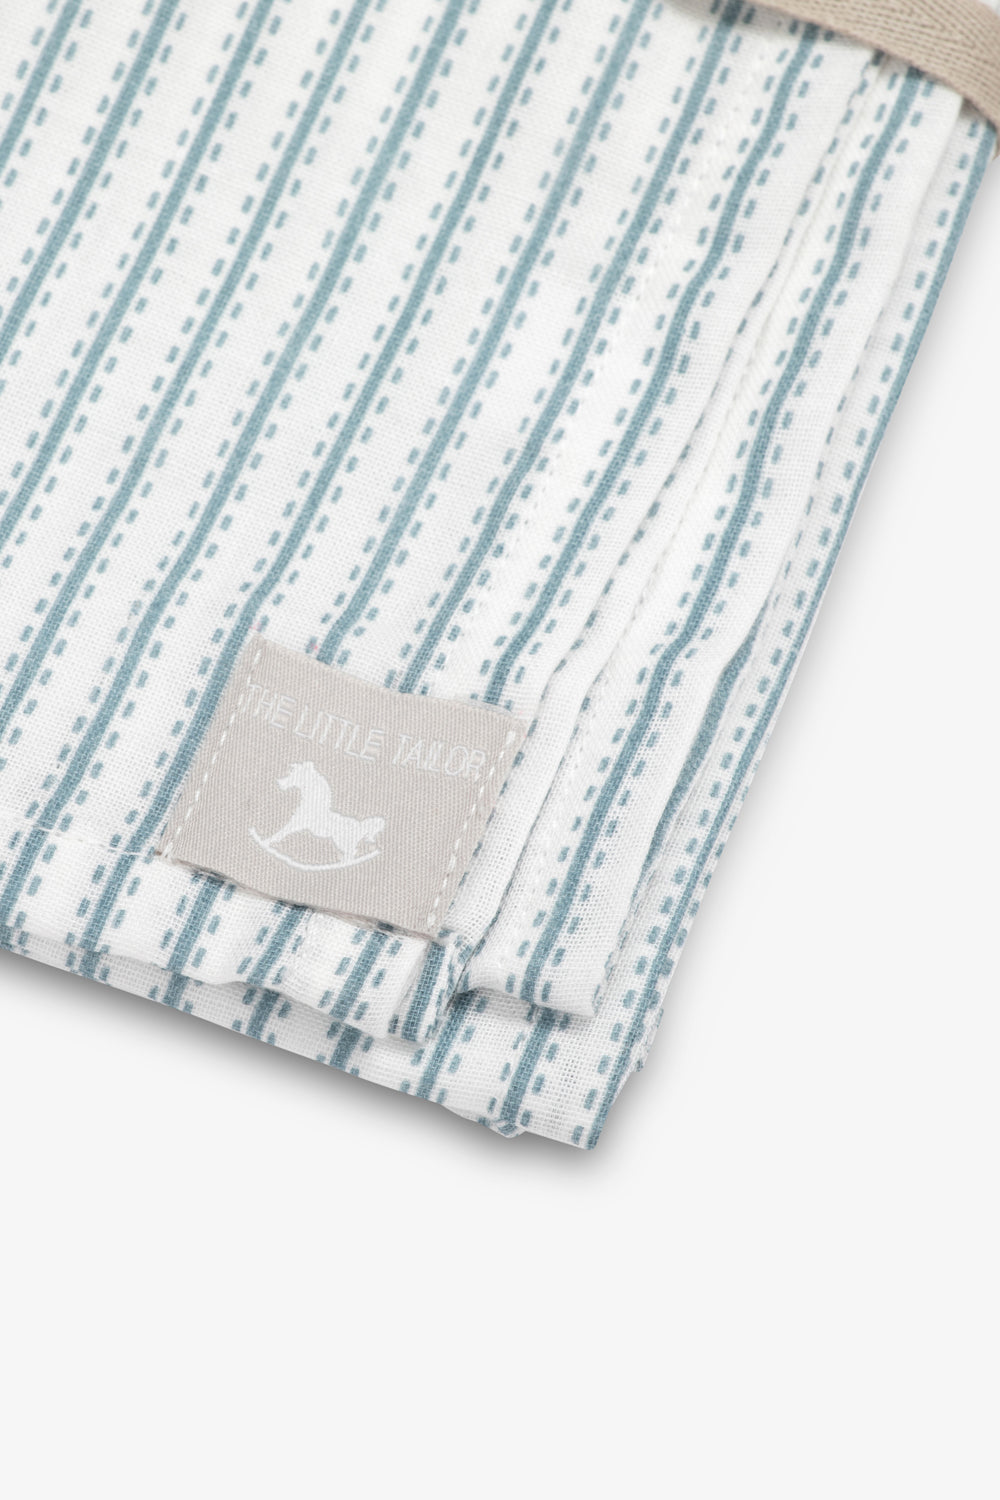 Large Muslin Blanket/Scarf, blue ticking stripe print